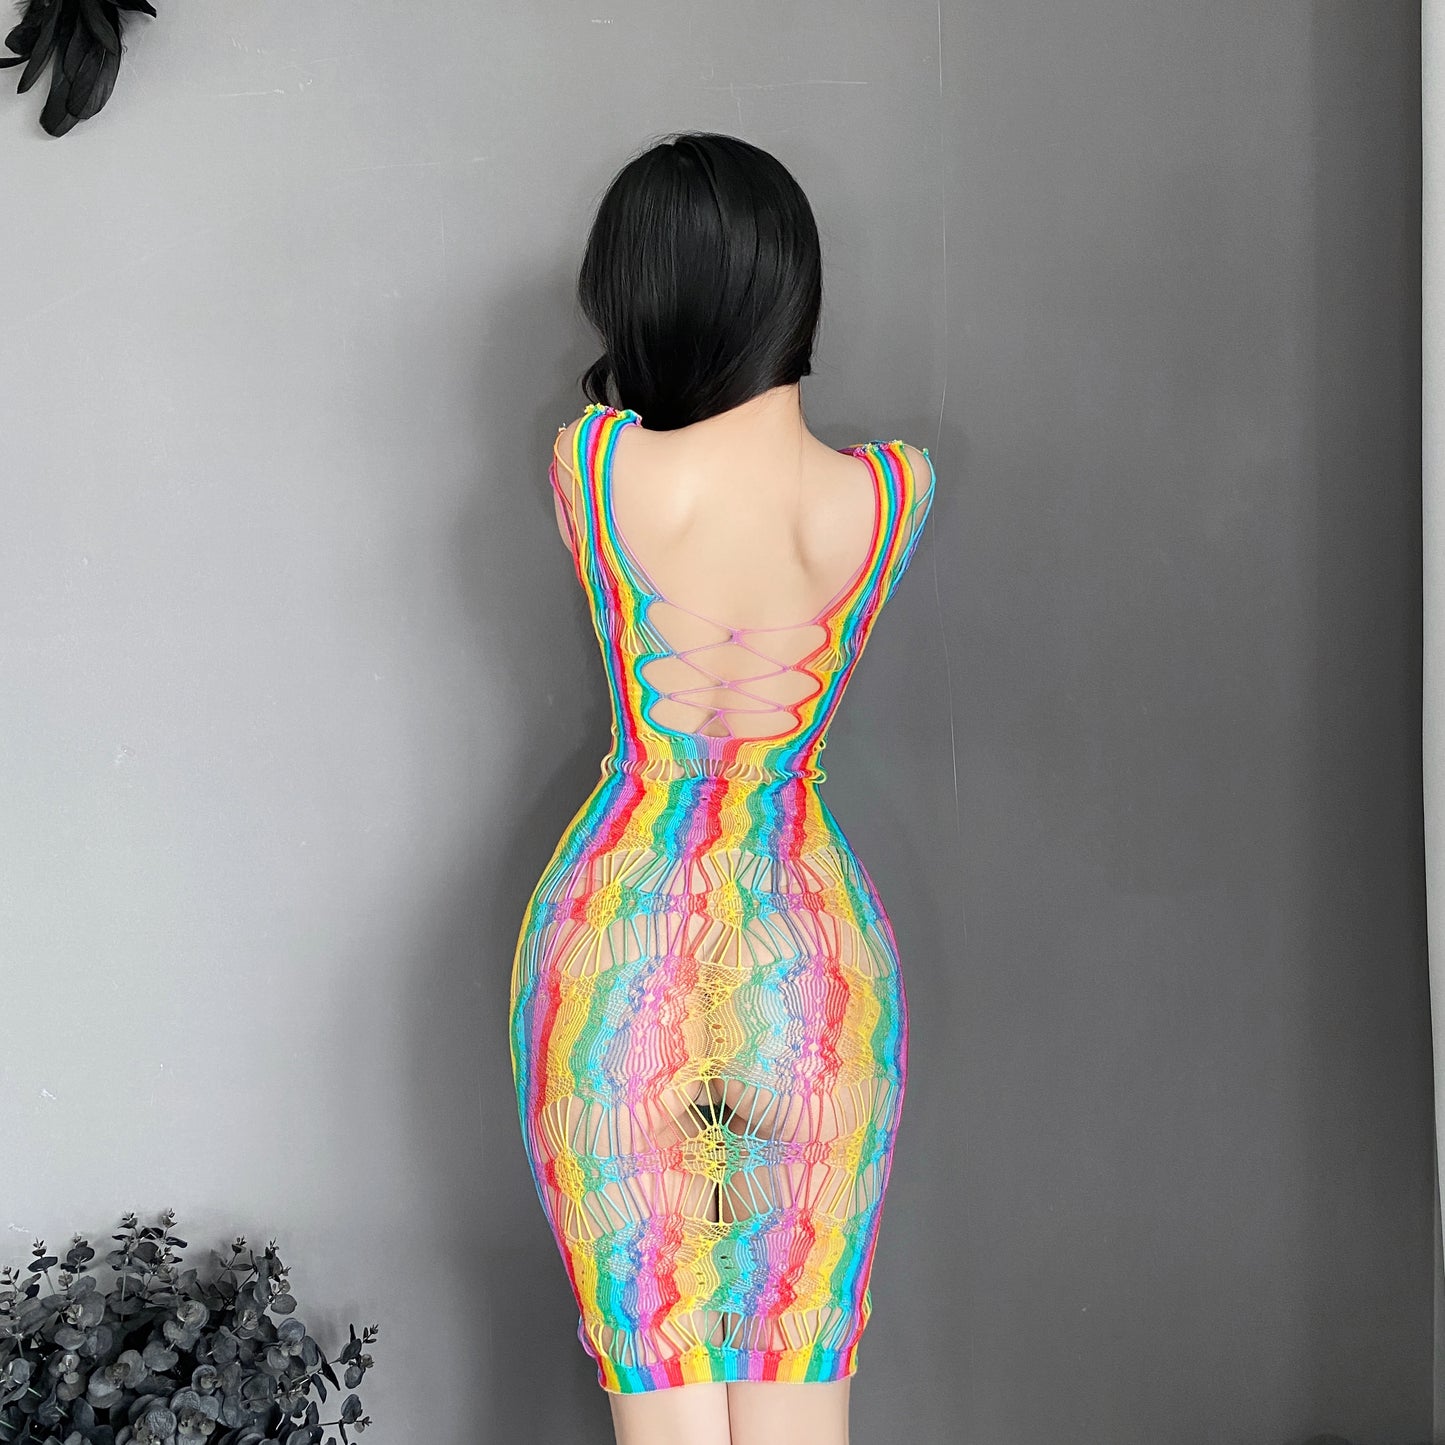 Rainbow skirt V1 彩虹渔网连体衣V1 1430